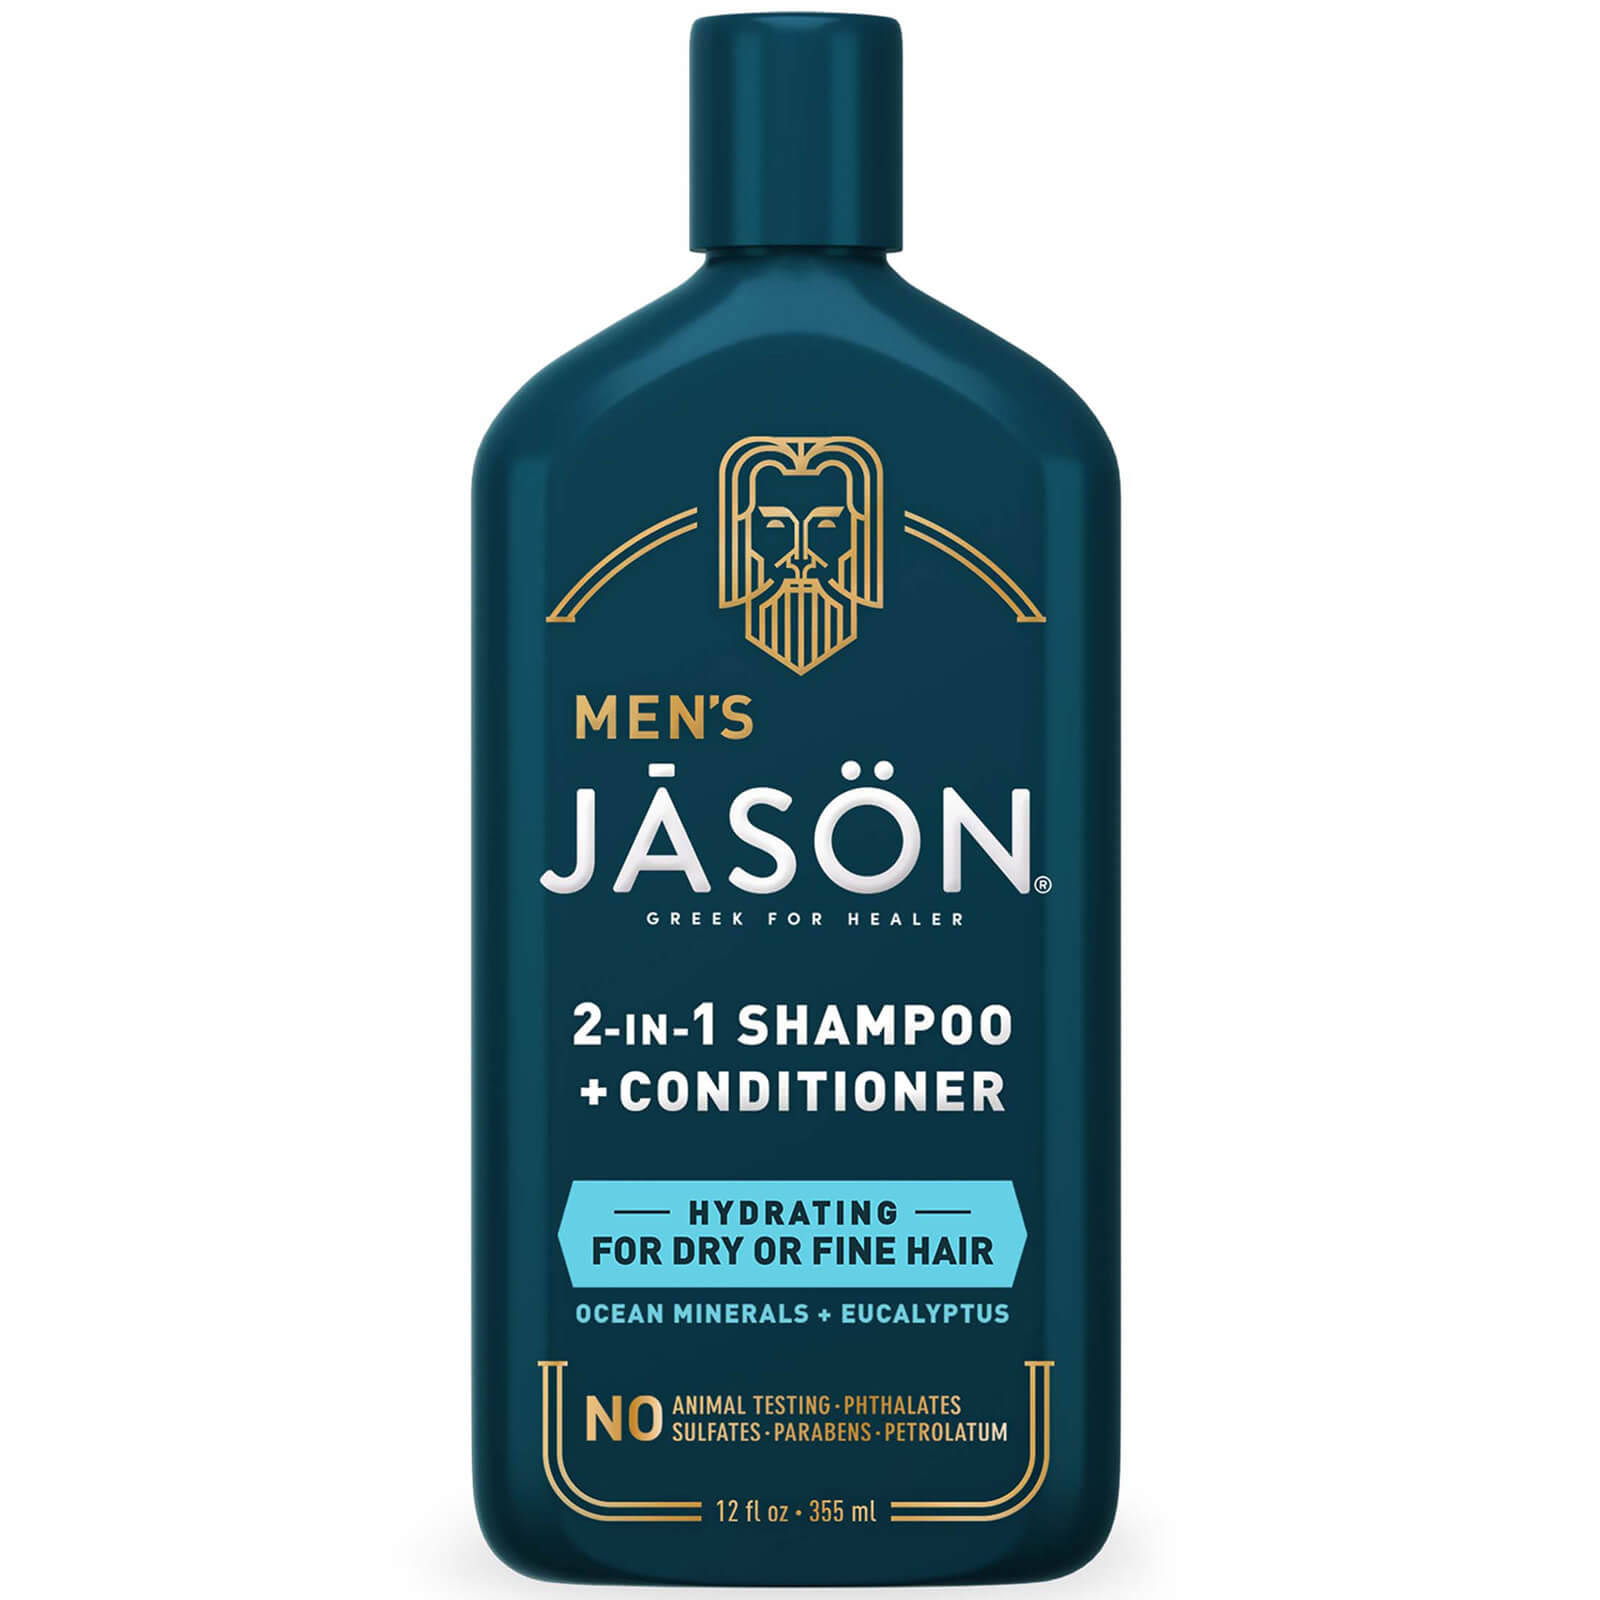 Jason Shampoo + Conditioner, 2-in-1, Men's - 12 fl oz